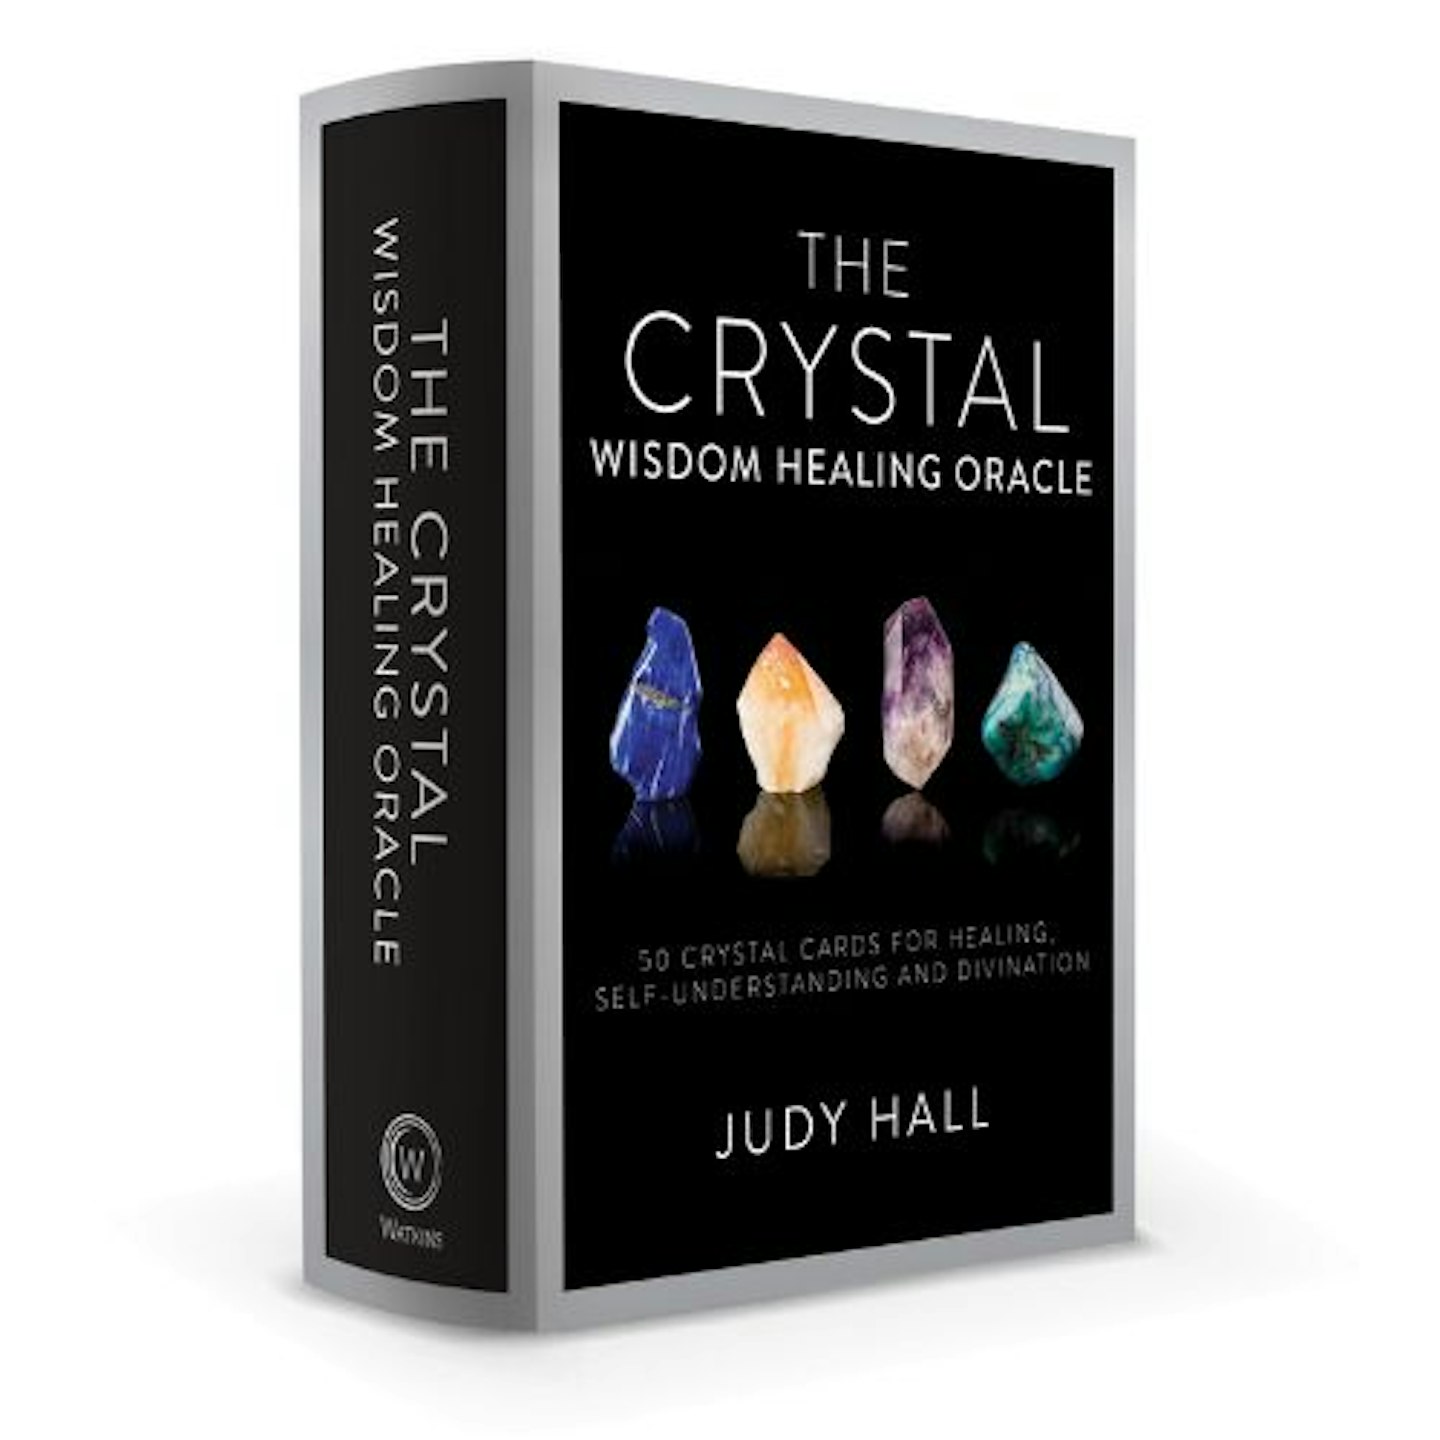 Crystal Wisdom Healing Oracle by Judy Hall